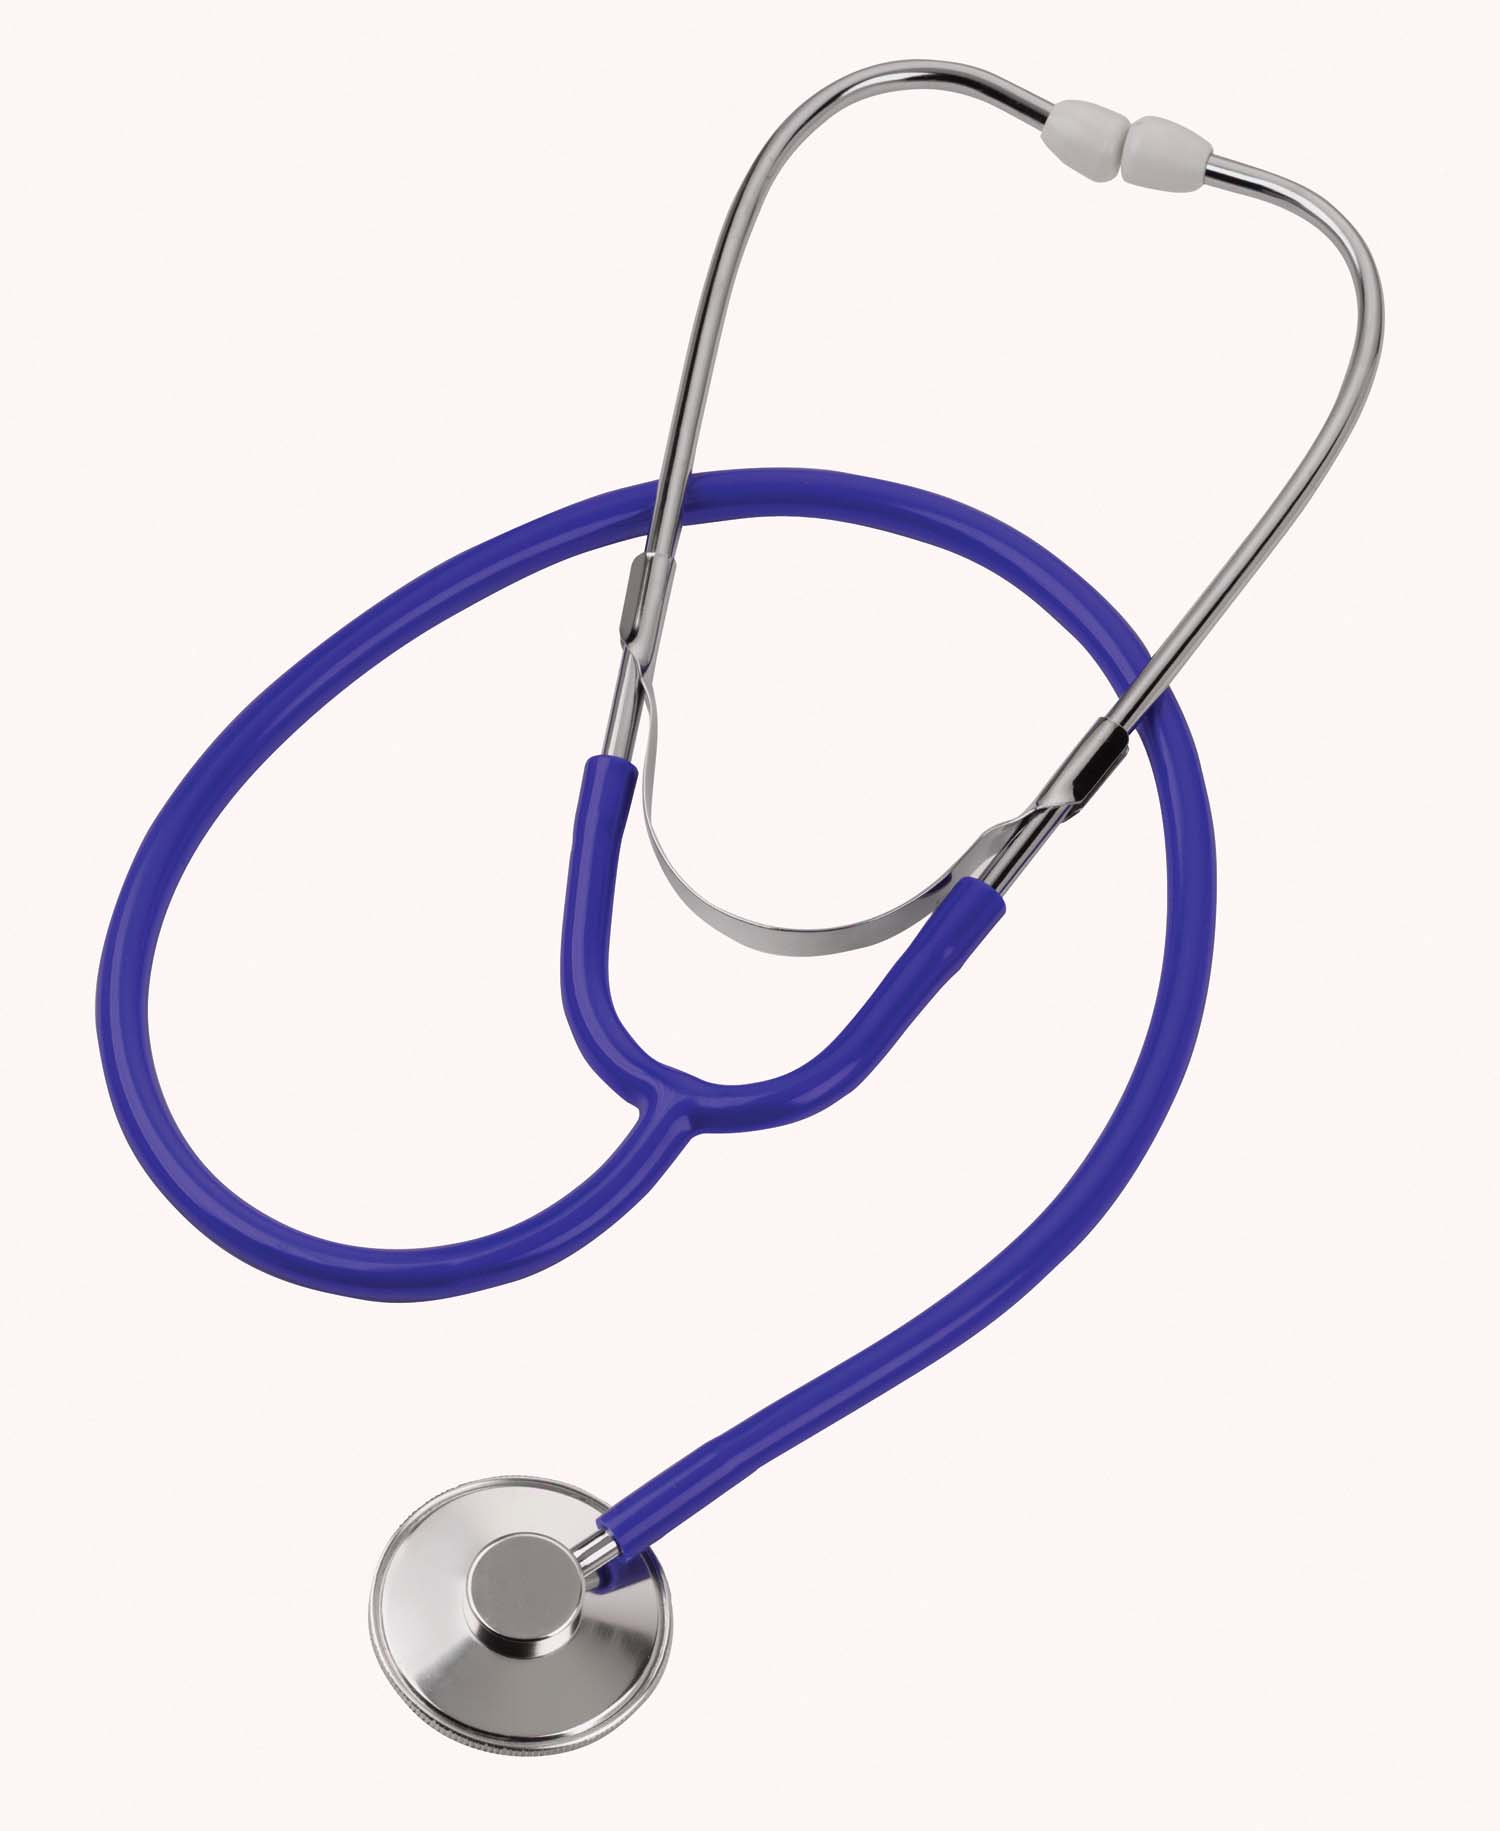 spectrum-nurse-stethoscope-adult-boxed-green-10-428-120-lr.jpg